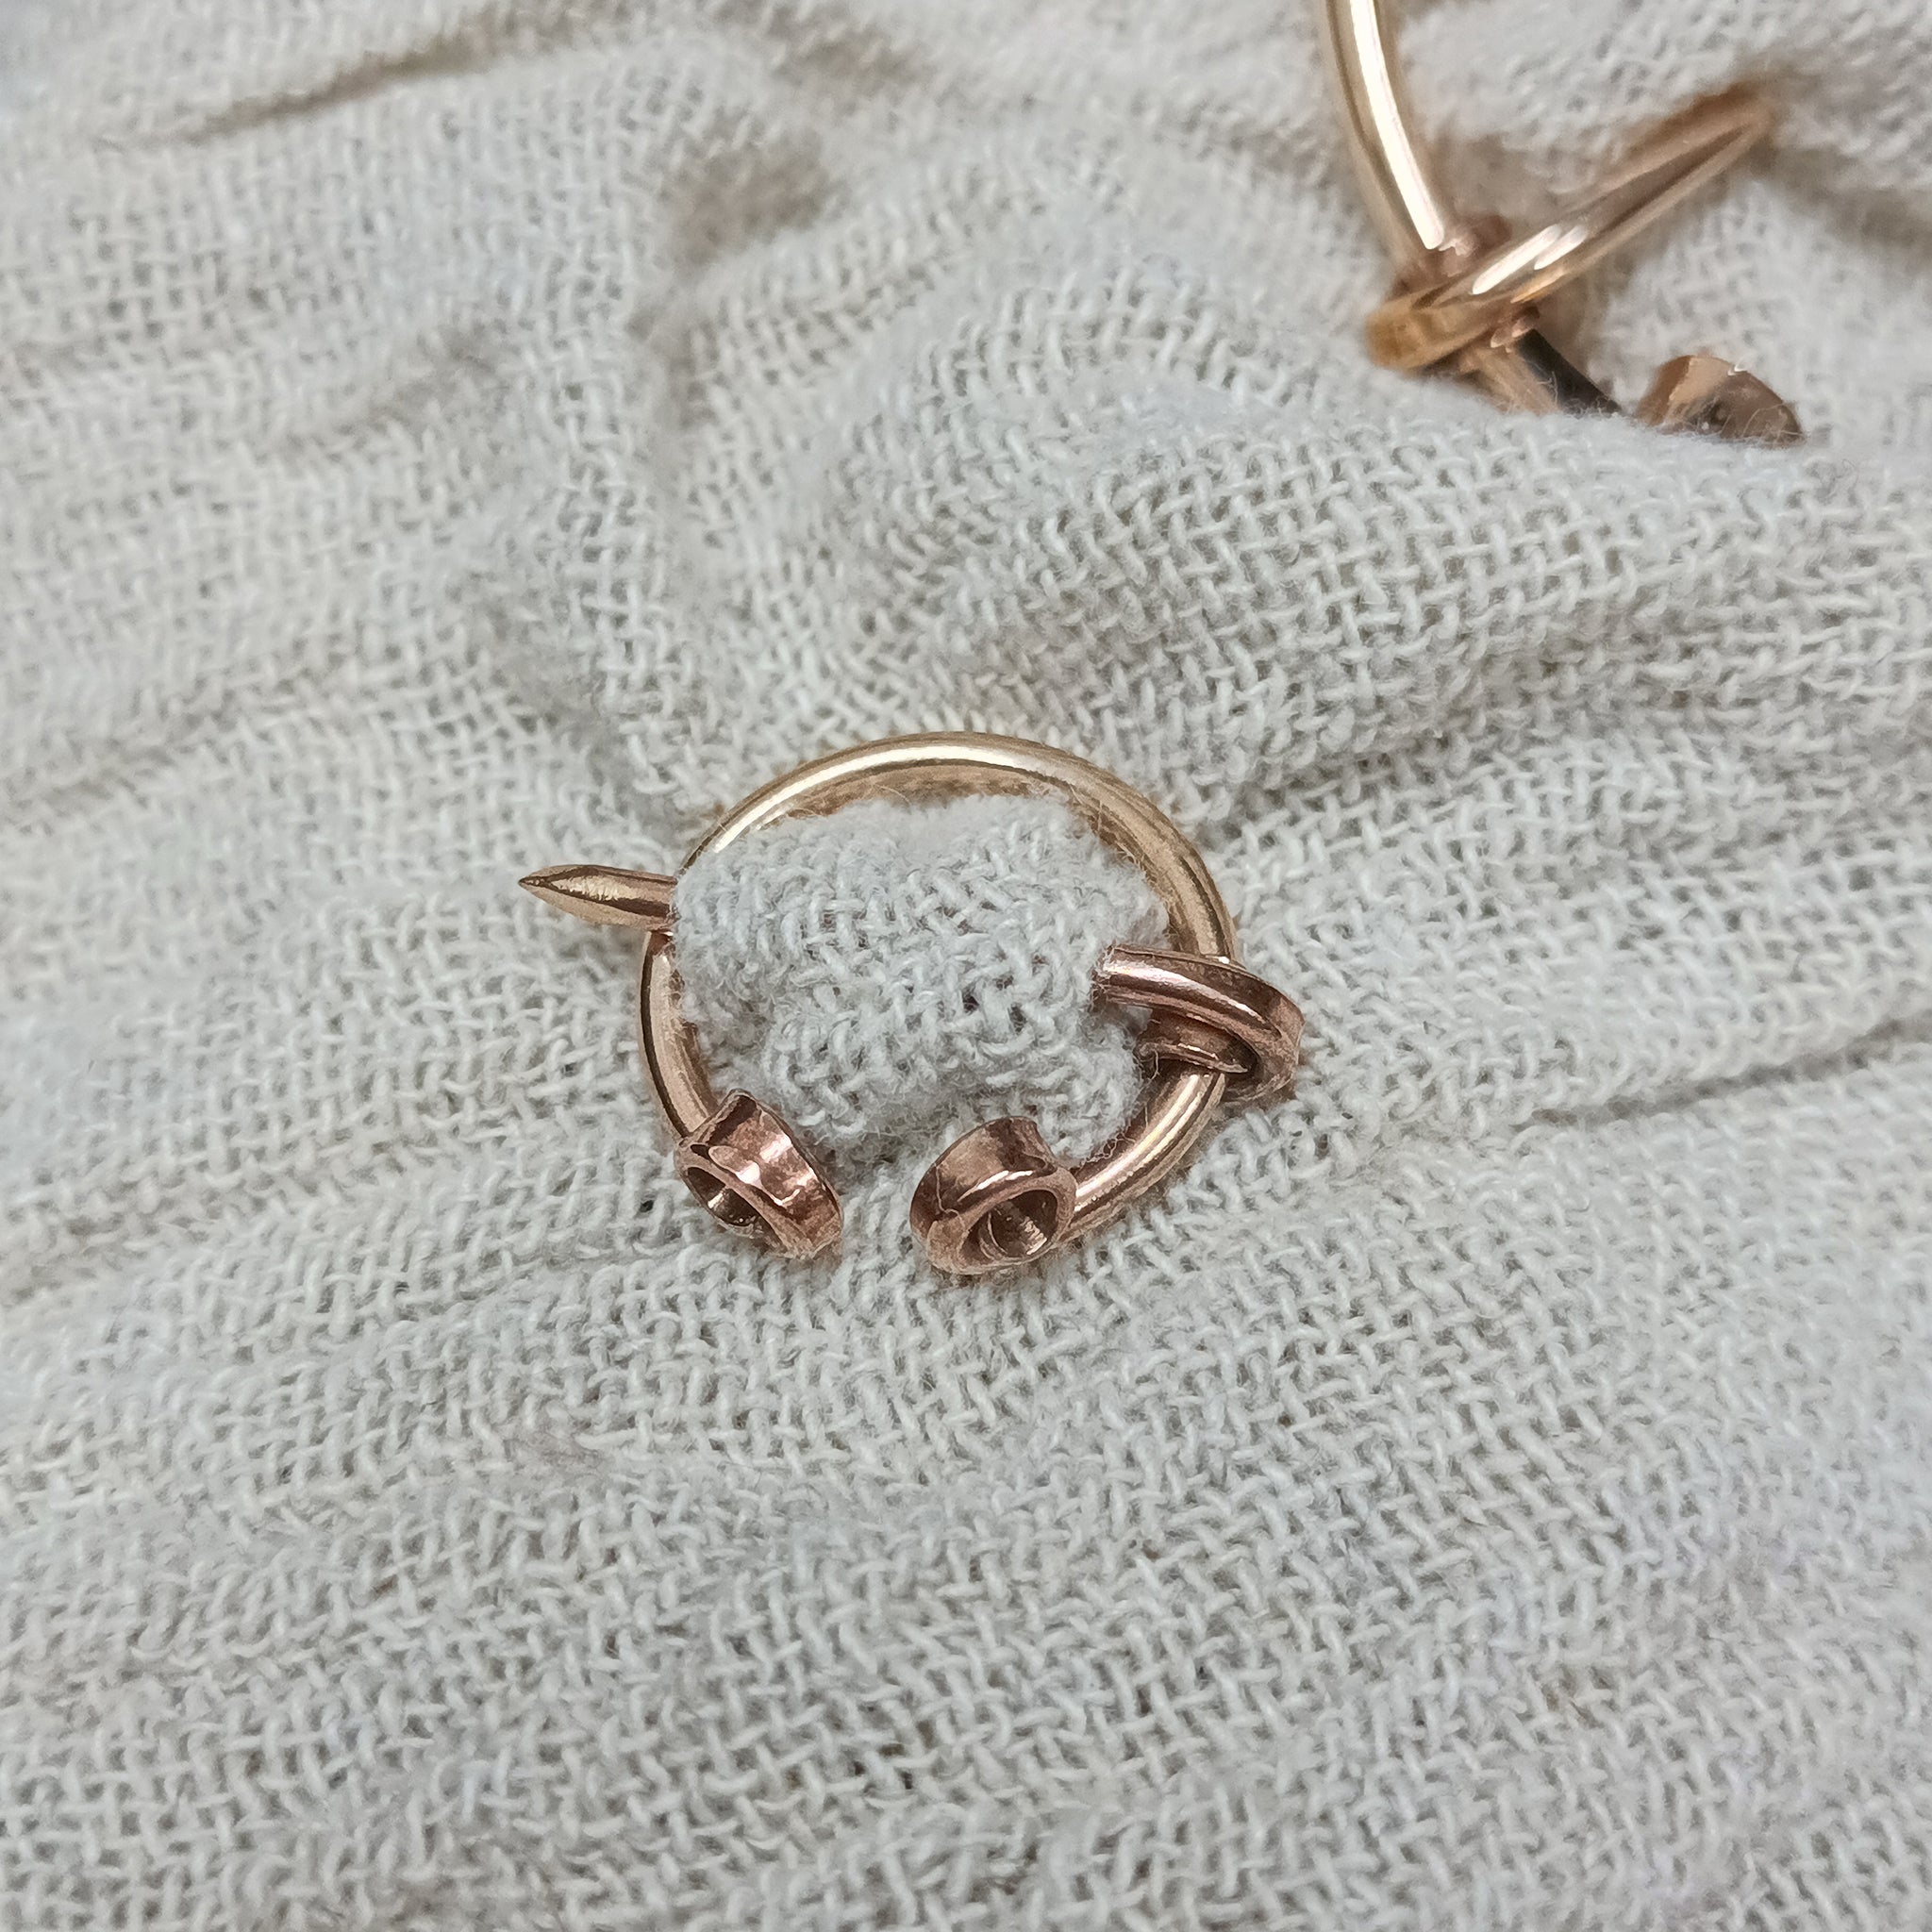 Small Bronze Clothes Pin / Cloak Pin / Fibula - Hooked Through Linen